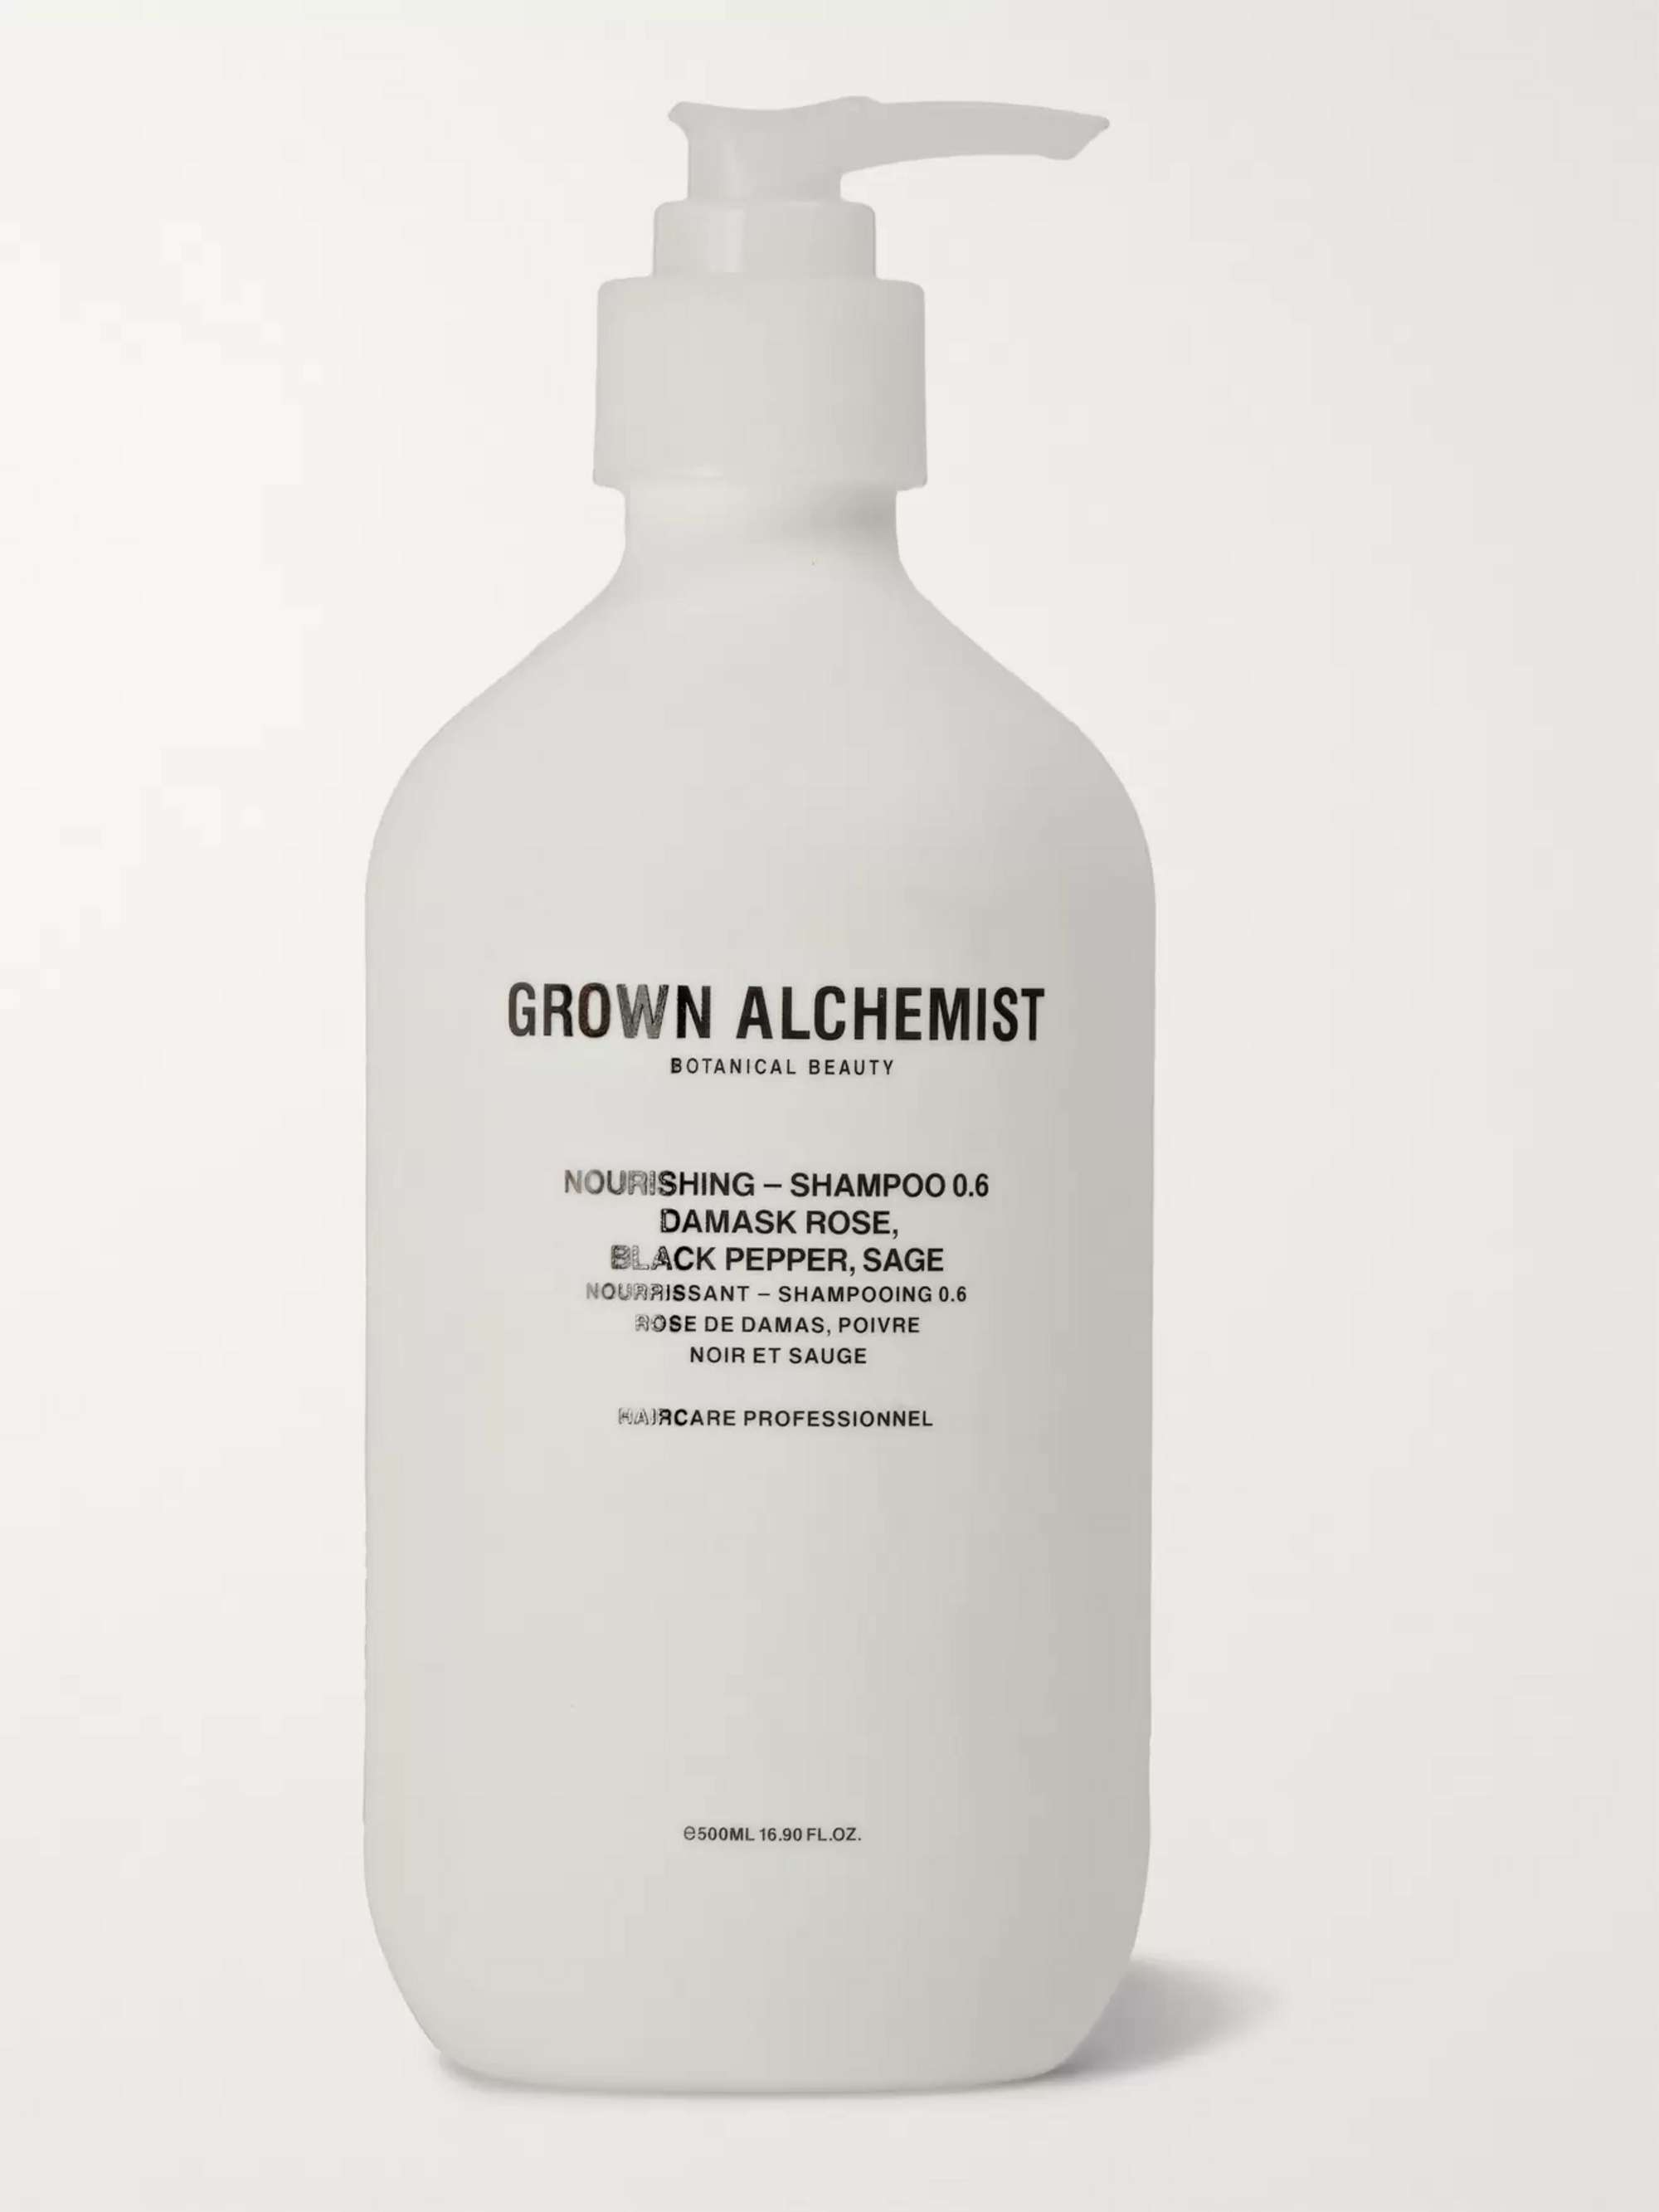 GROWN ALCHEMIST Nourishing Shampoo 0.6 - Damask Rose, Black Pepper and Sage, 500ml